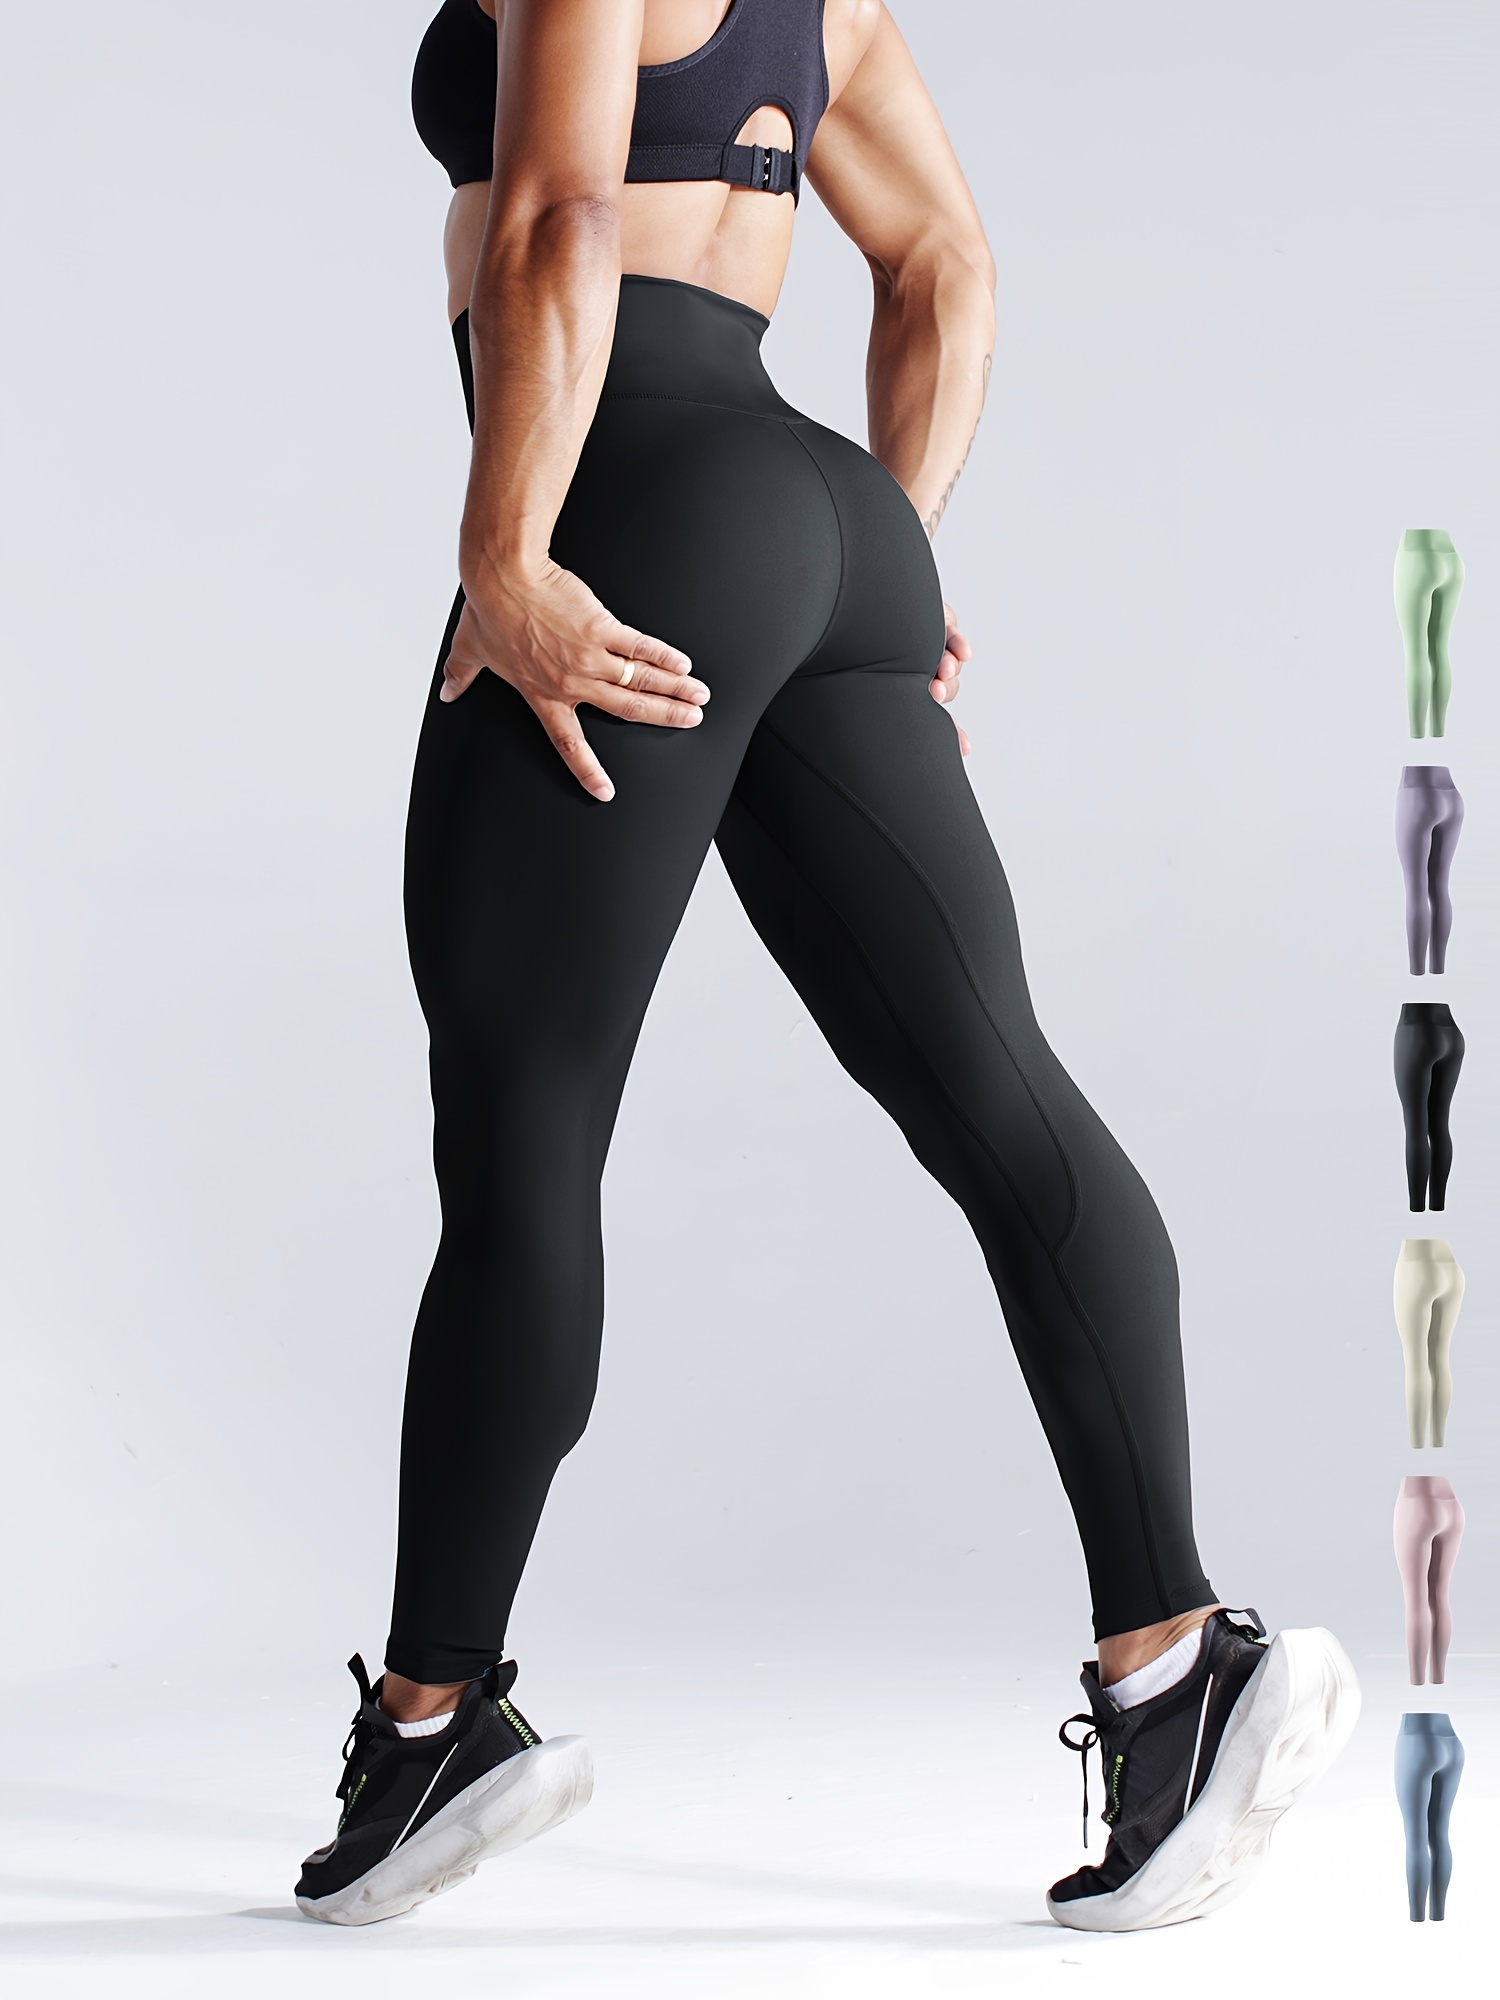 Shape Body High Waist Yoga Sports Leggings Slim Fit Stretchy